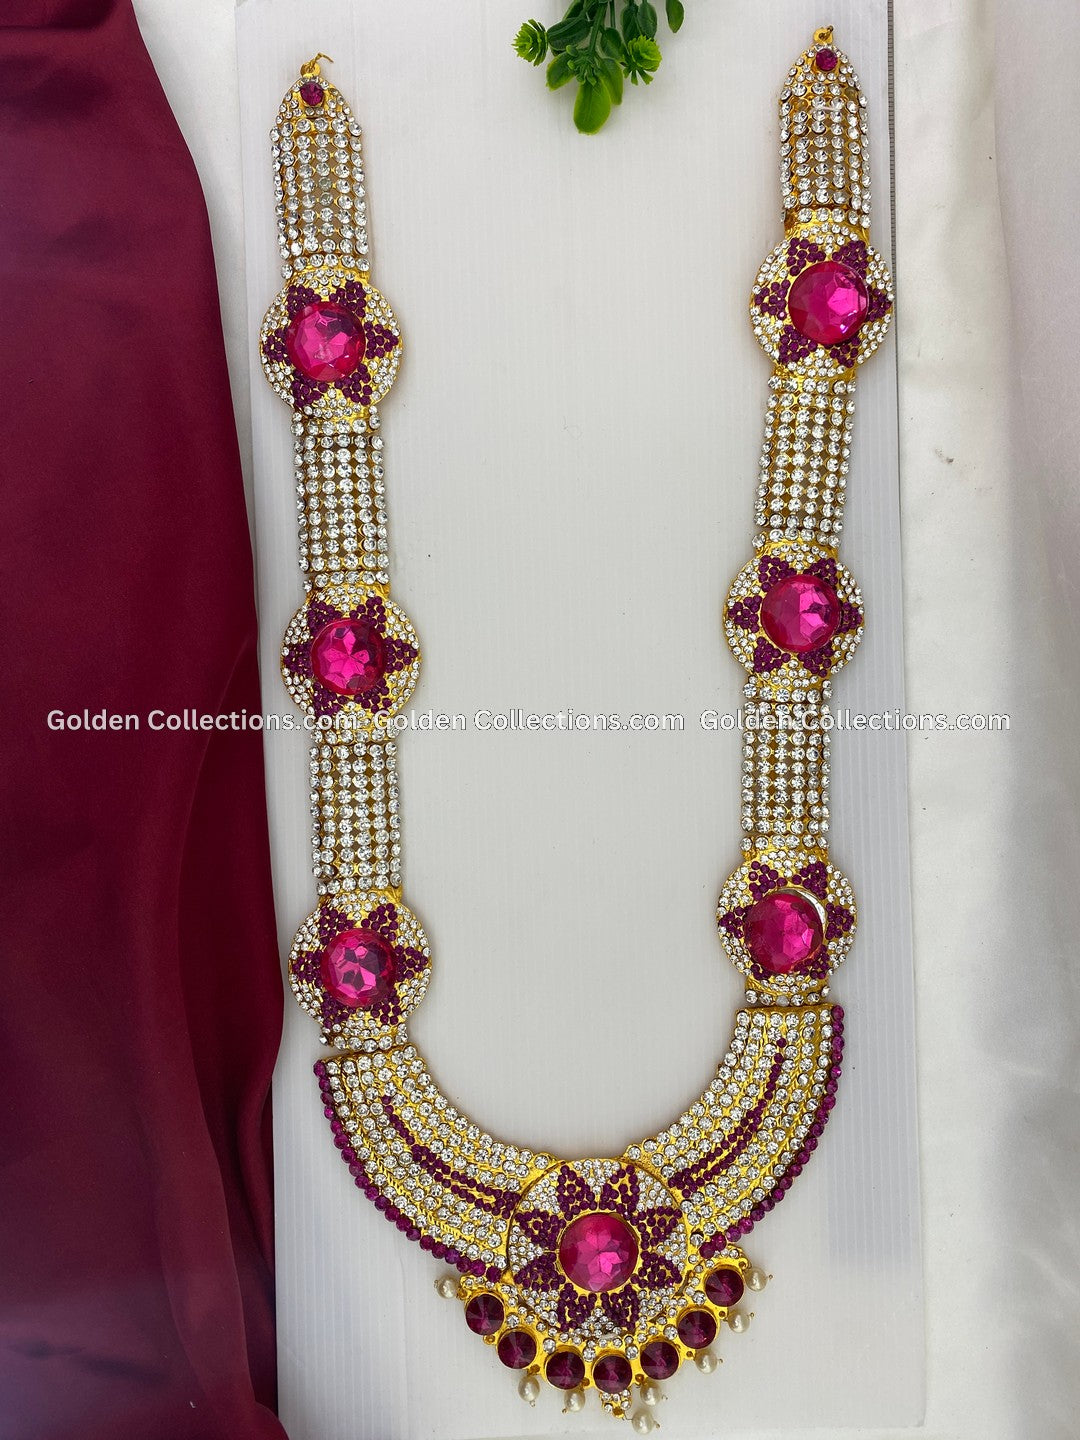 Sacred Beauty - Deity Goddess Jewellery - GoldenCollections